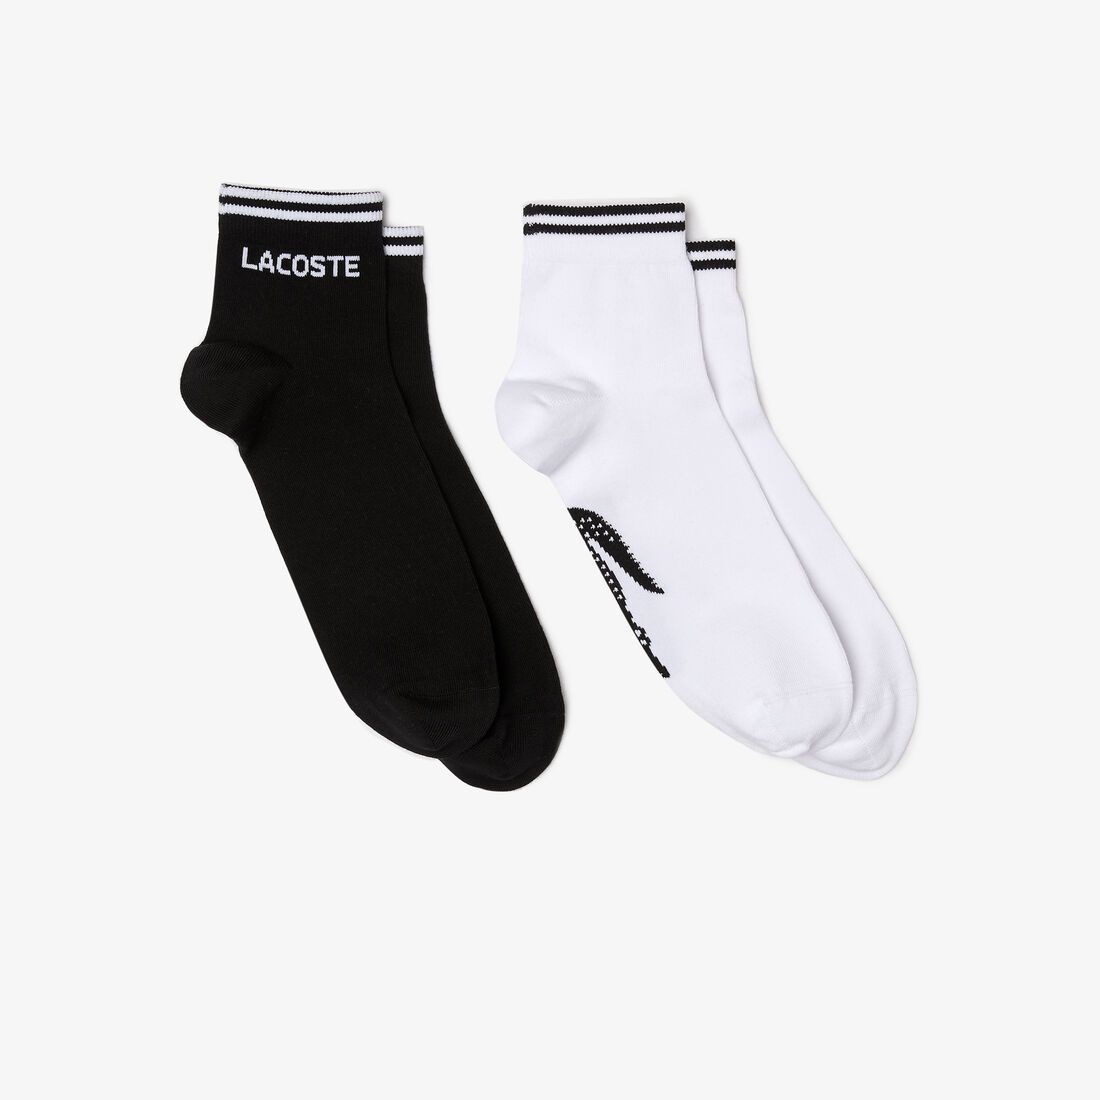 Men's Two-pack of Lacoste Tennis low-cut socks in jacquard jersey